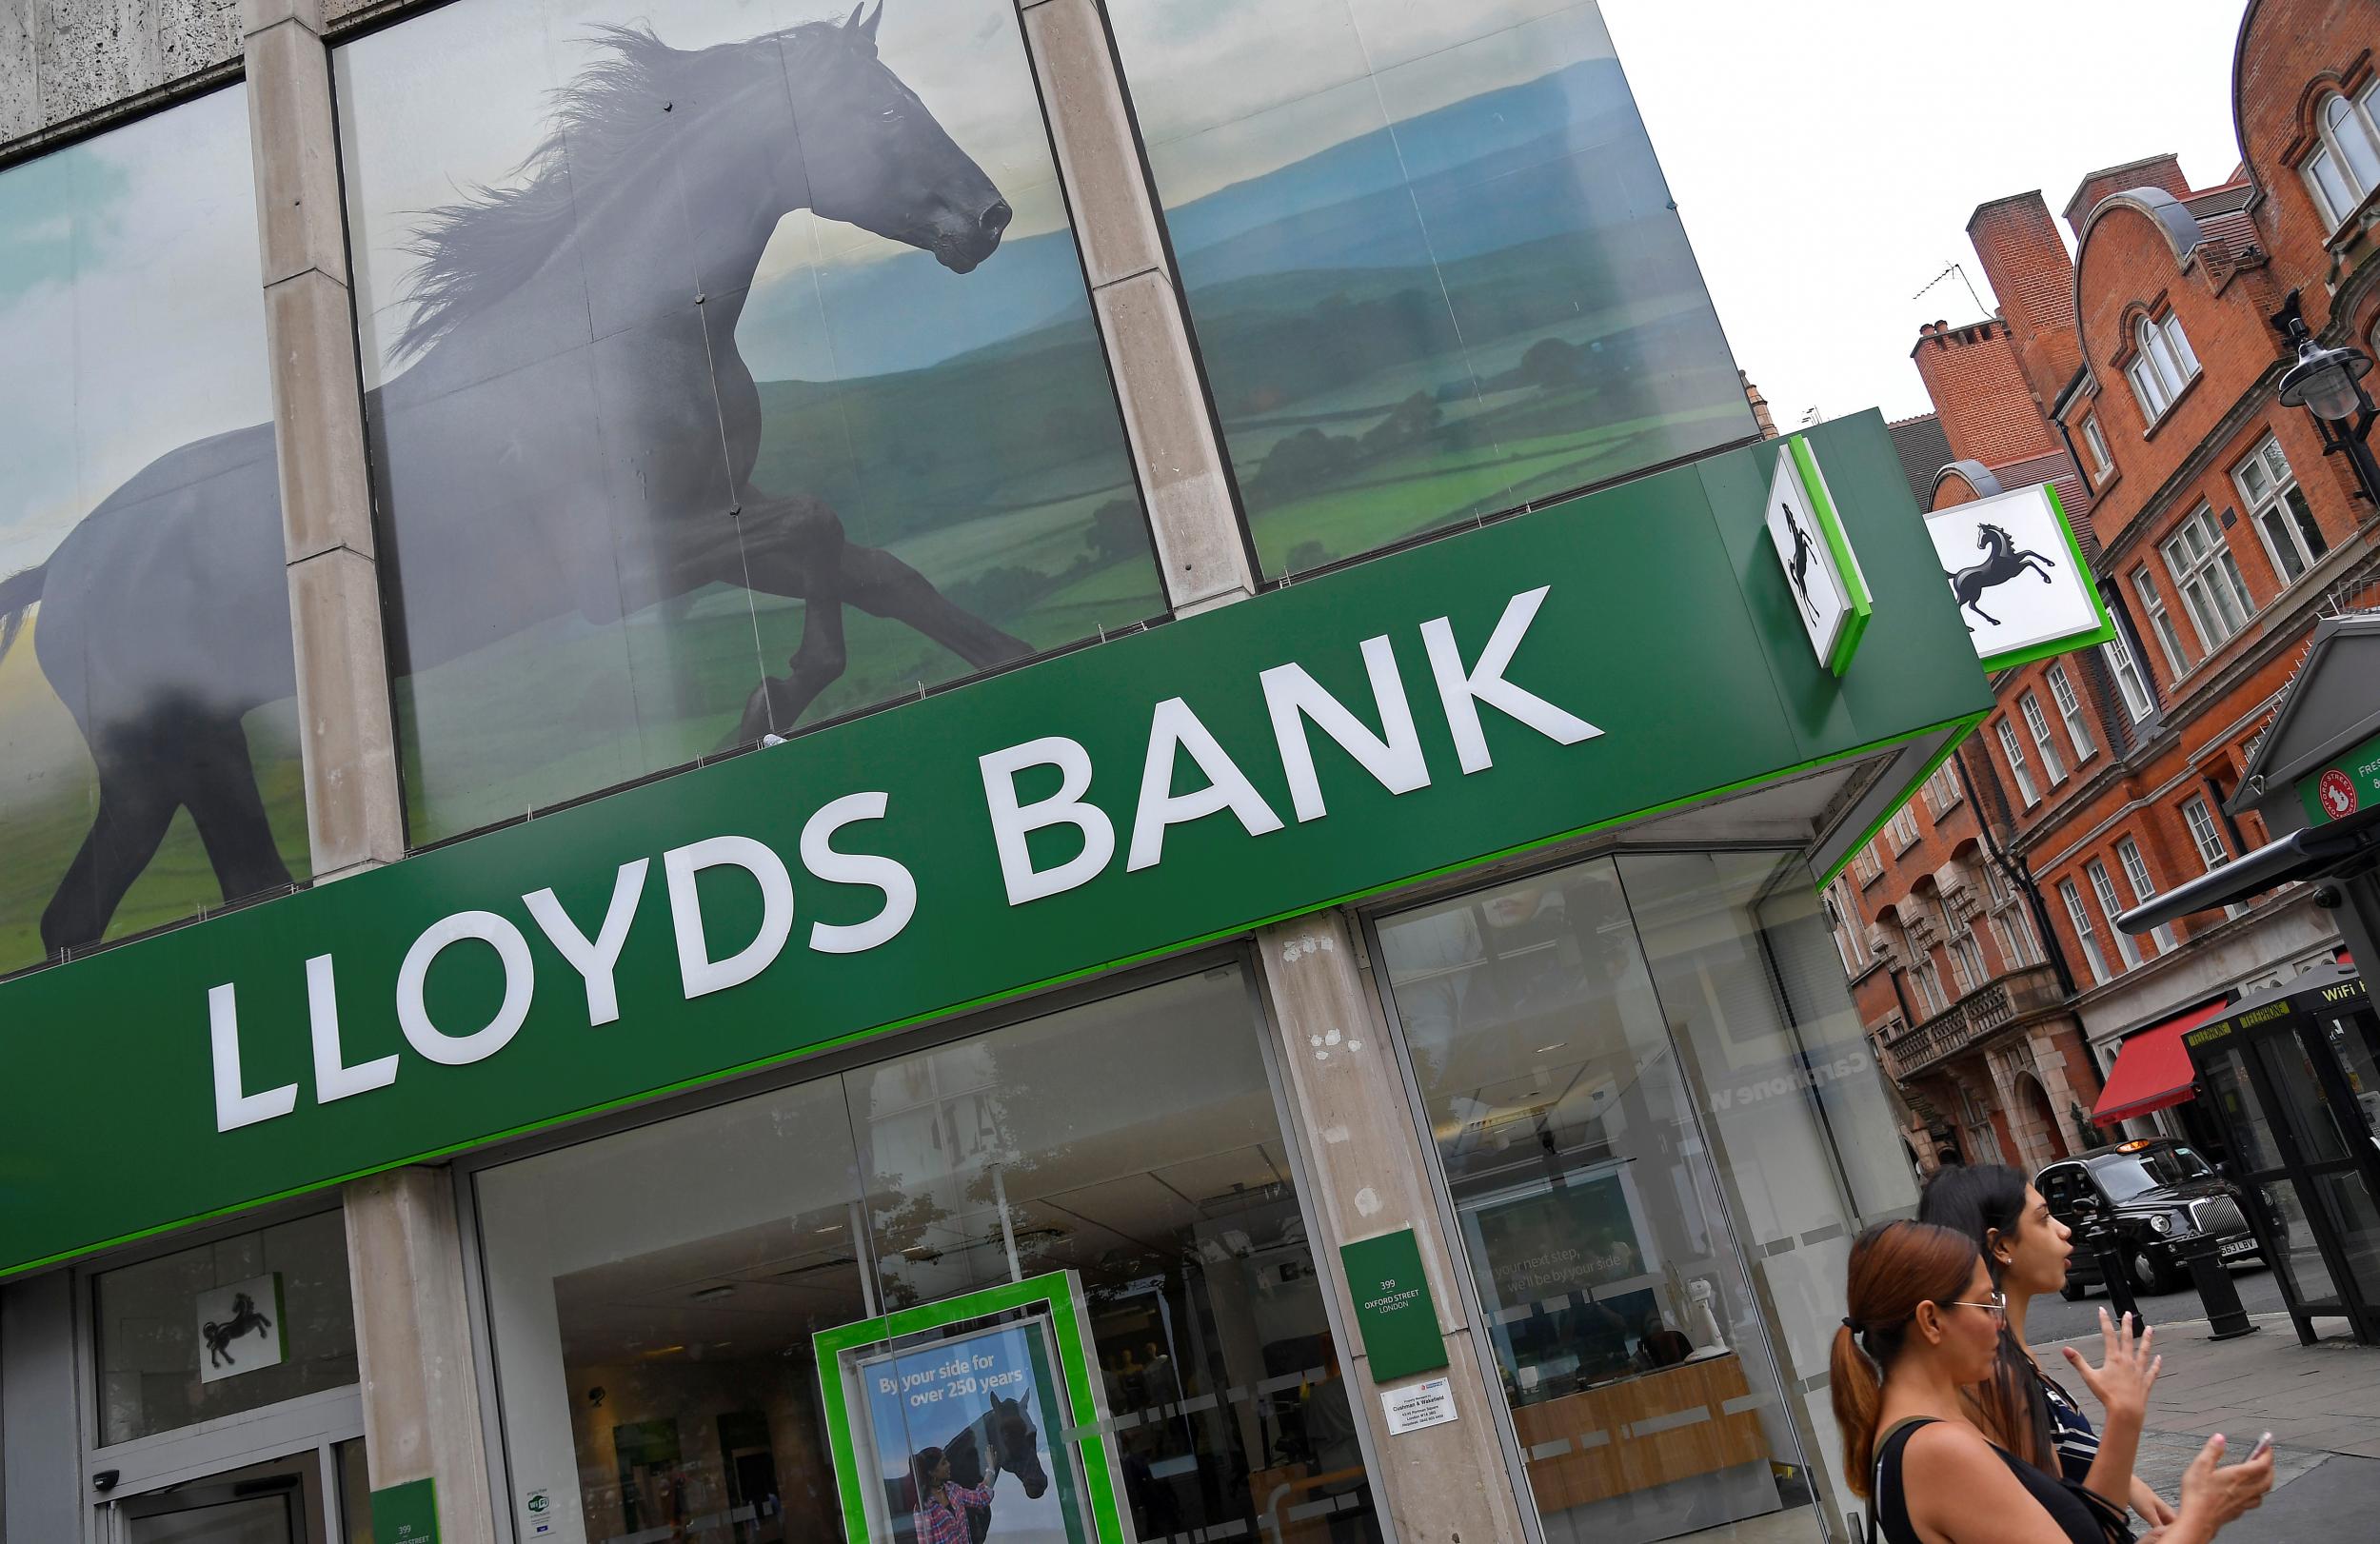 Crash affected Lloyds Banking Group